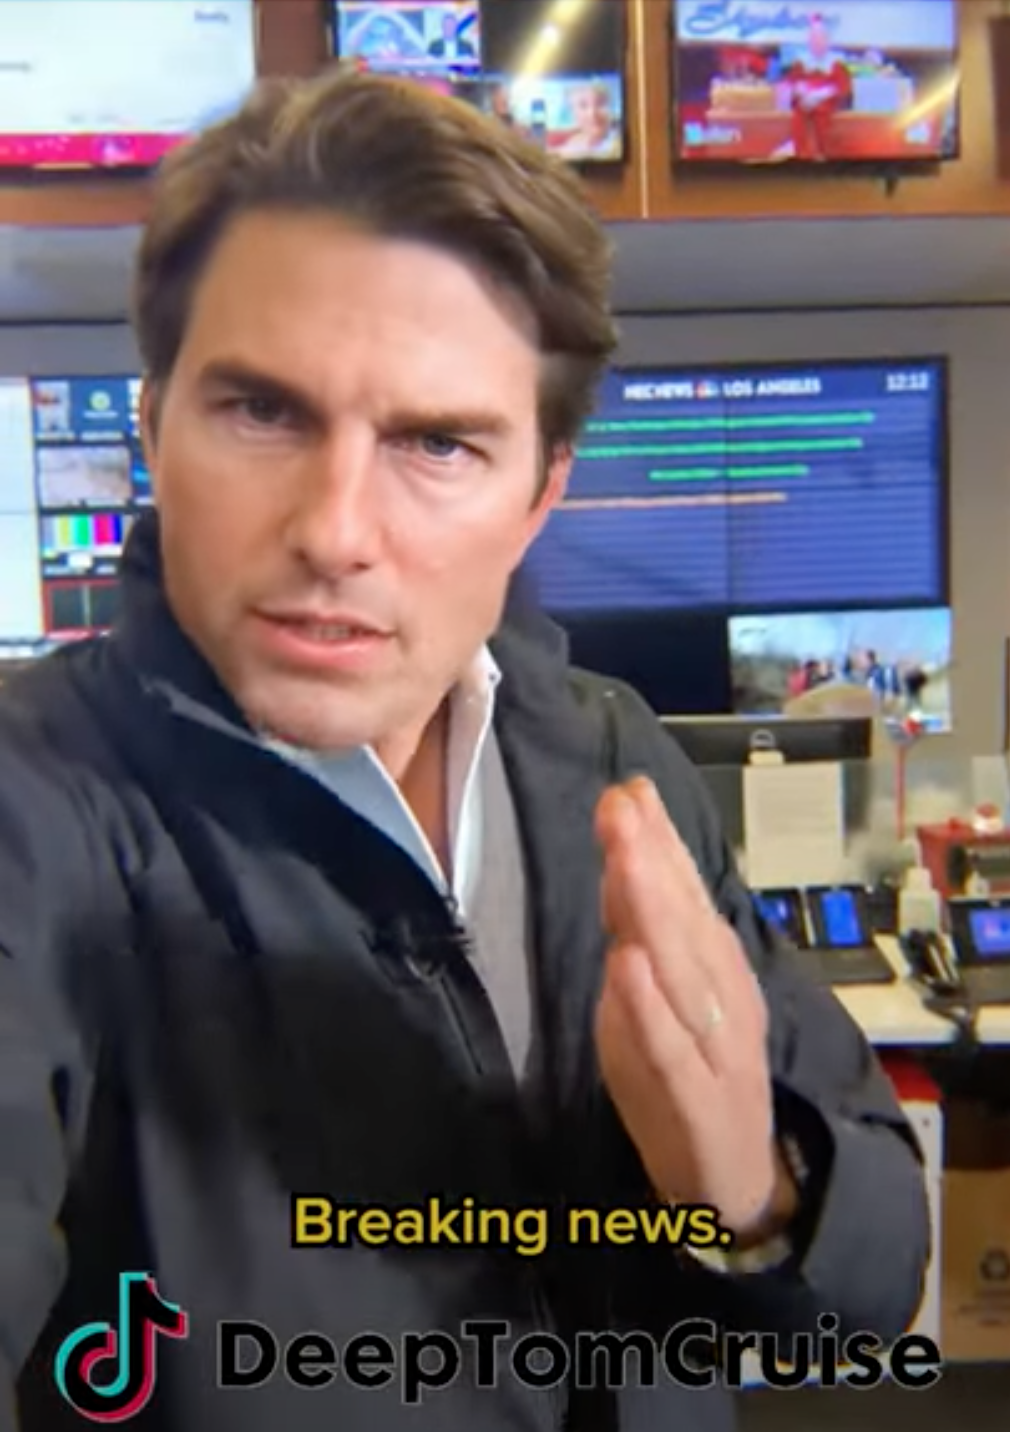 The Tom Cruise deepfake